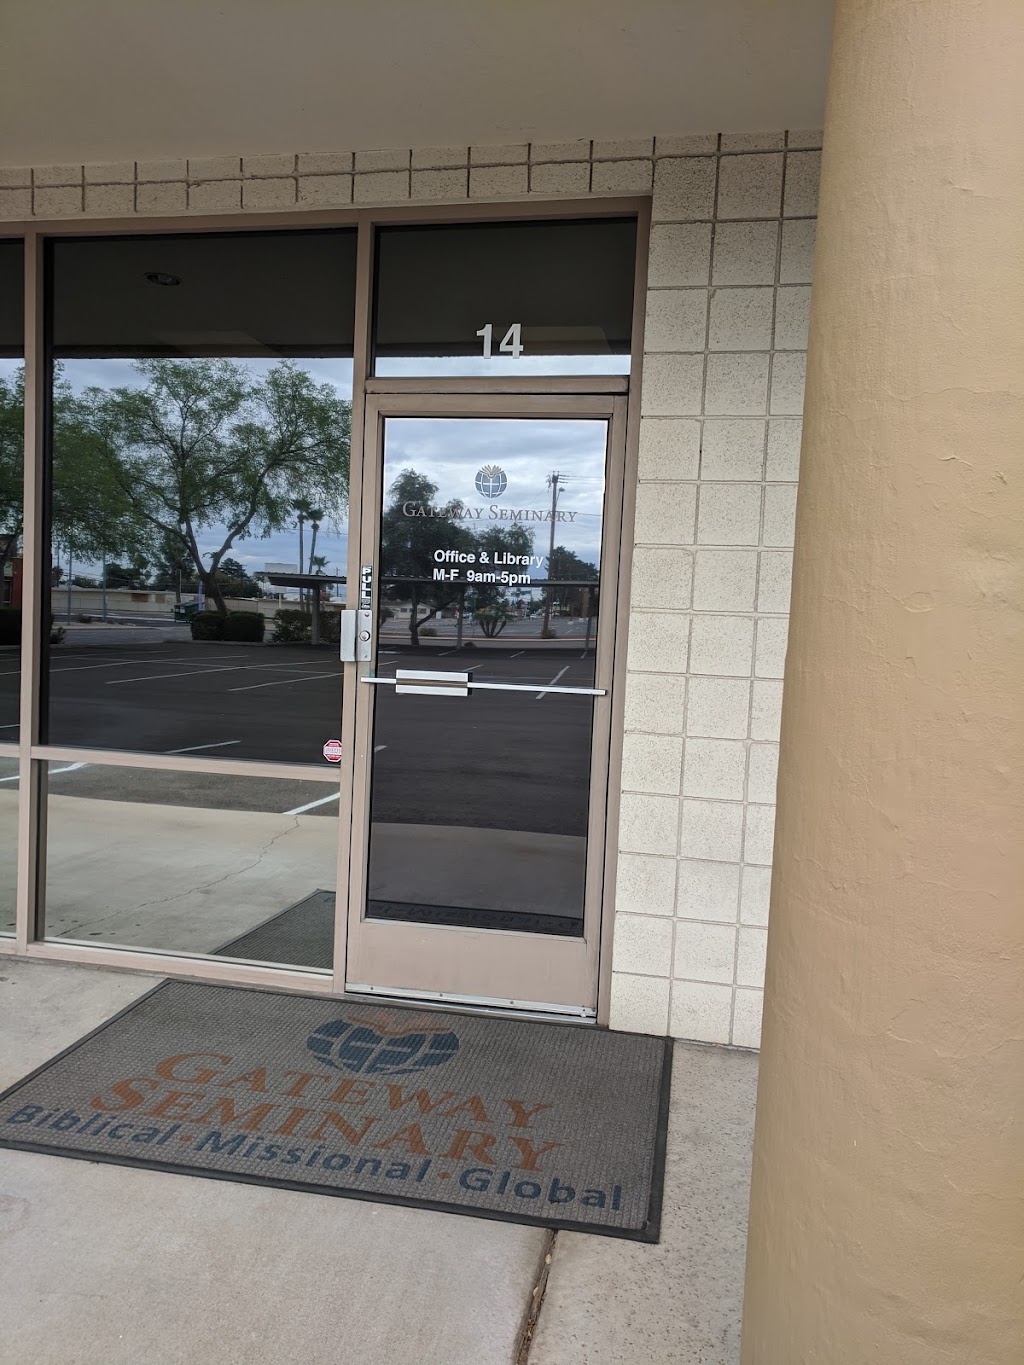 Gateway Seminary in Phoenix, Arizona | 12801 N 28th Dr Suite 14, Phoenix, AZ 85029, USA | Phone: (602) 843-8544